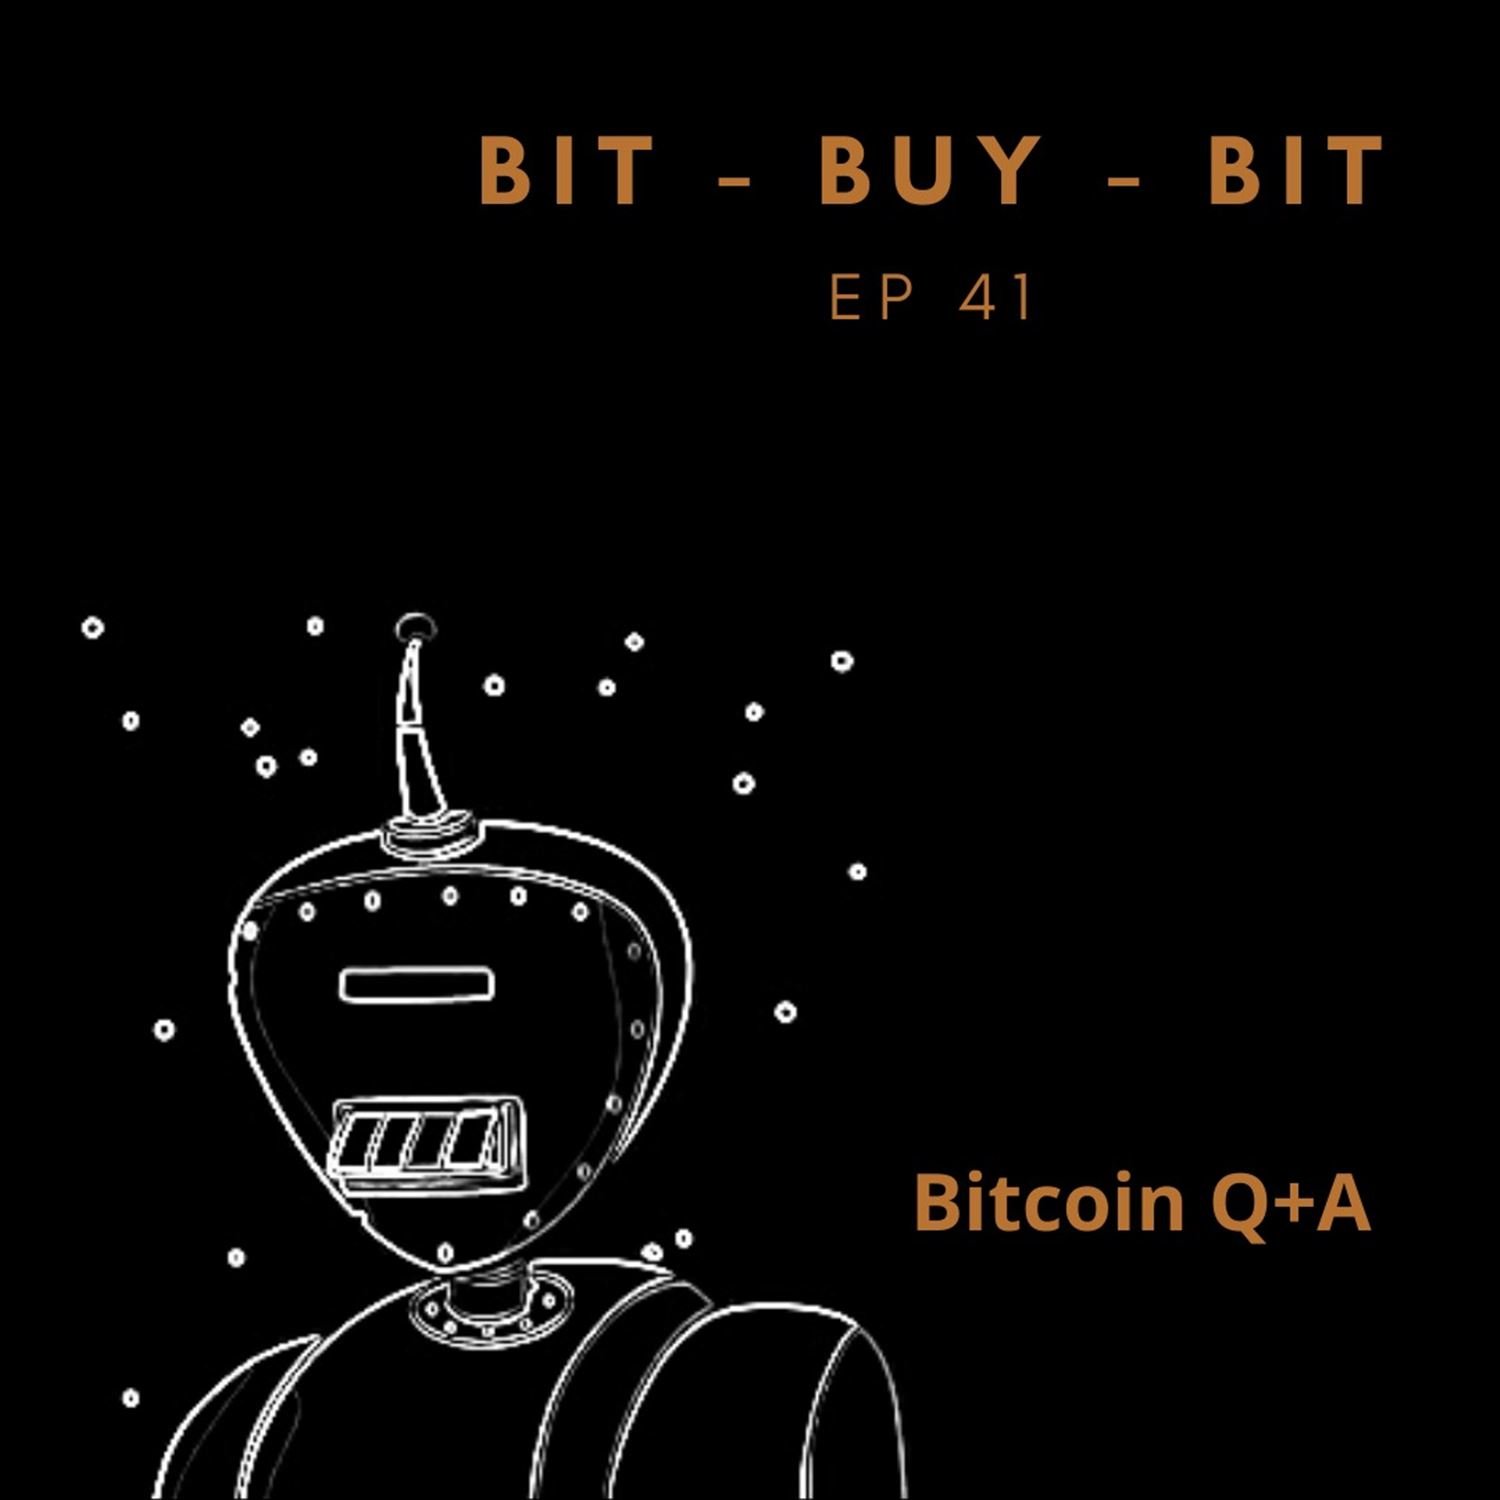 EP41 Bitcoin podcast with Bitcoin Q+A. (Lightning)